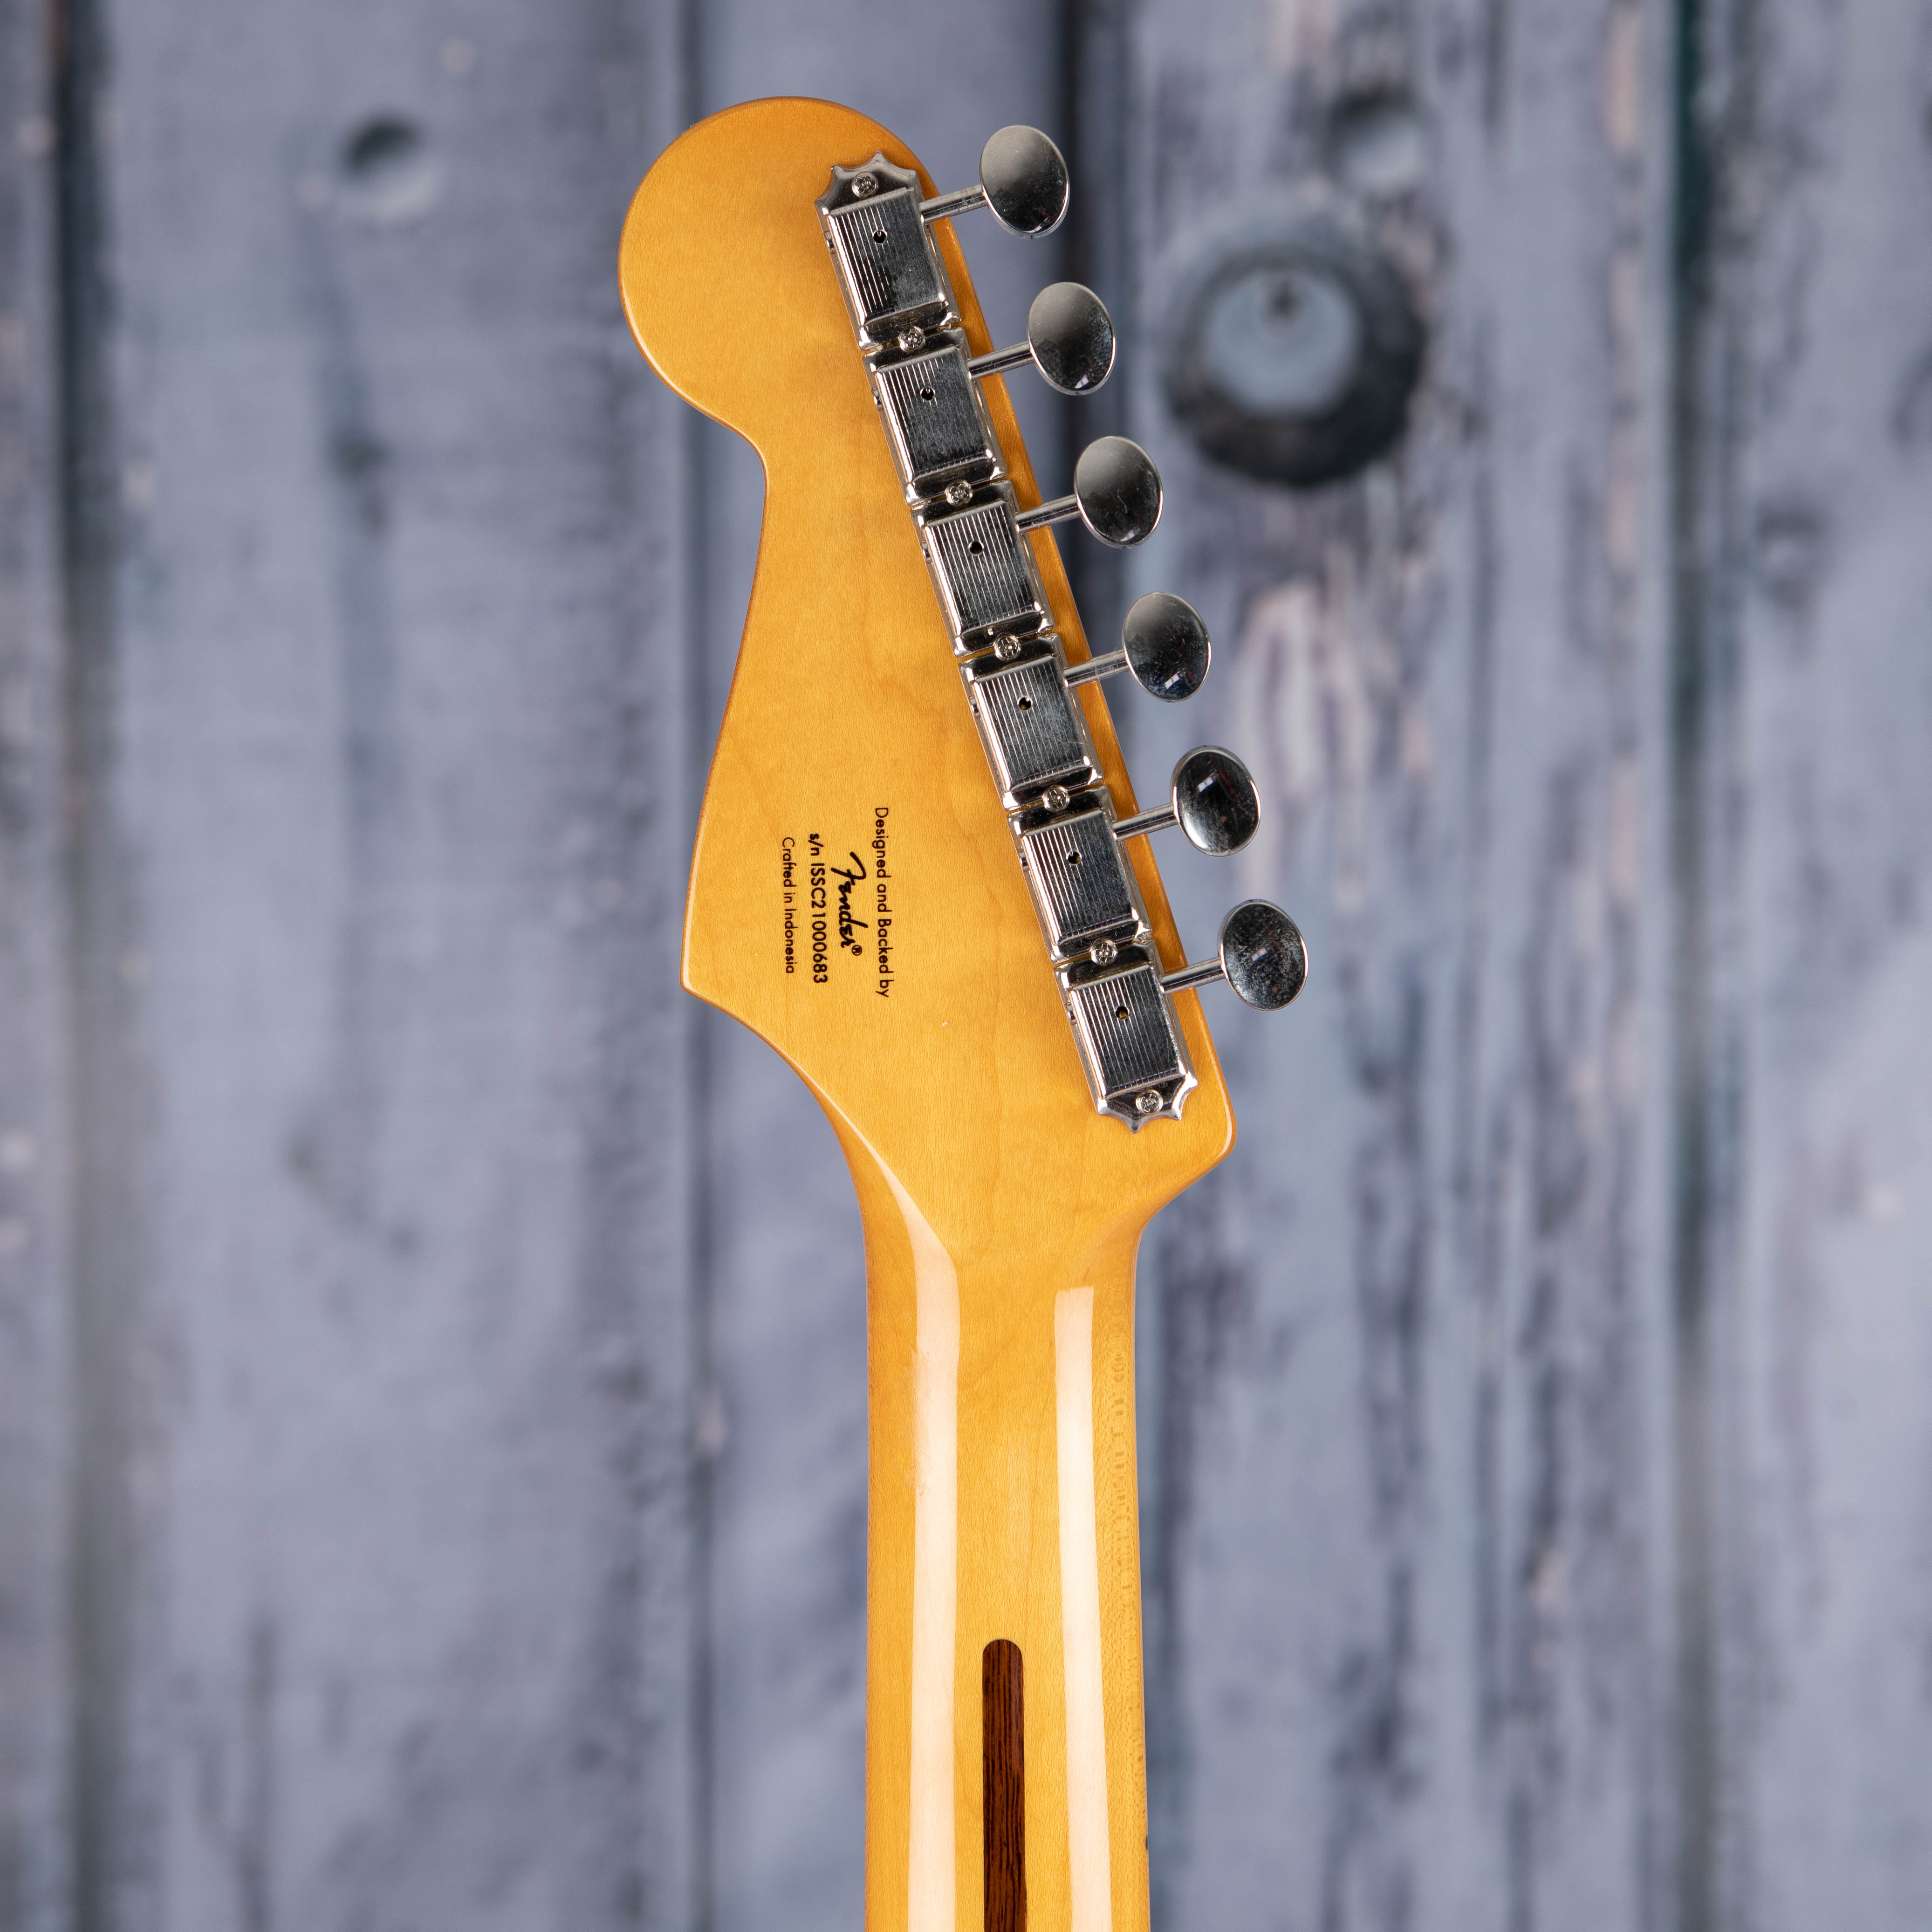 Squier Classic Vibe '50s Stratocaster Electric Guitar, 2-Color Sunburst, back headstock